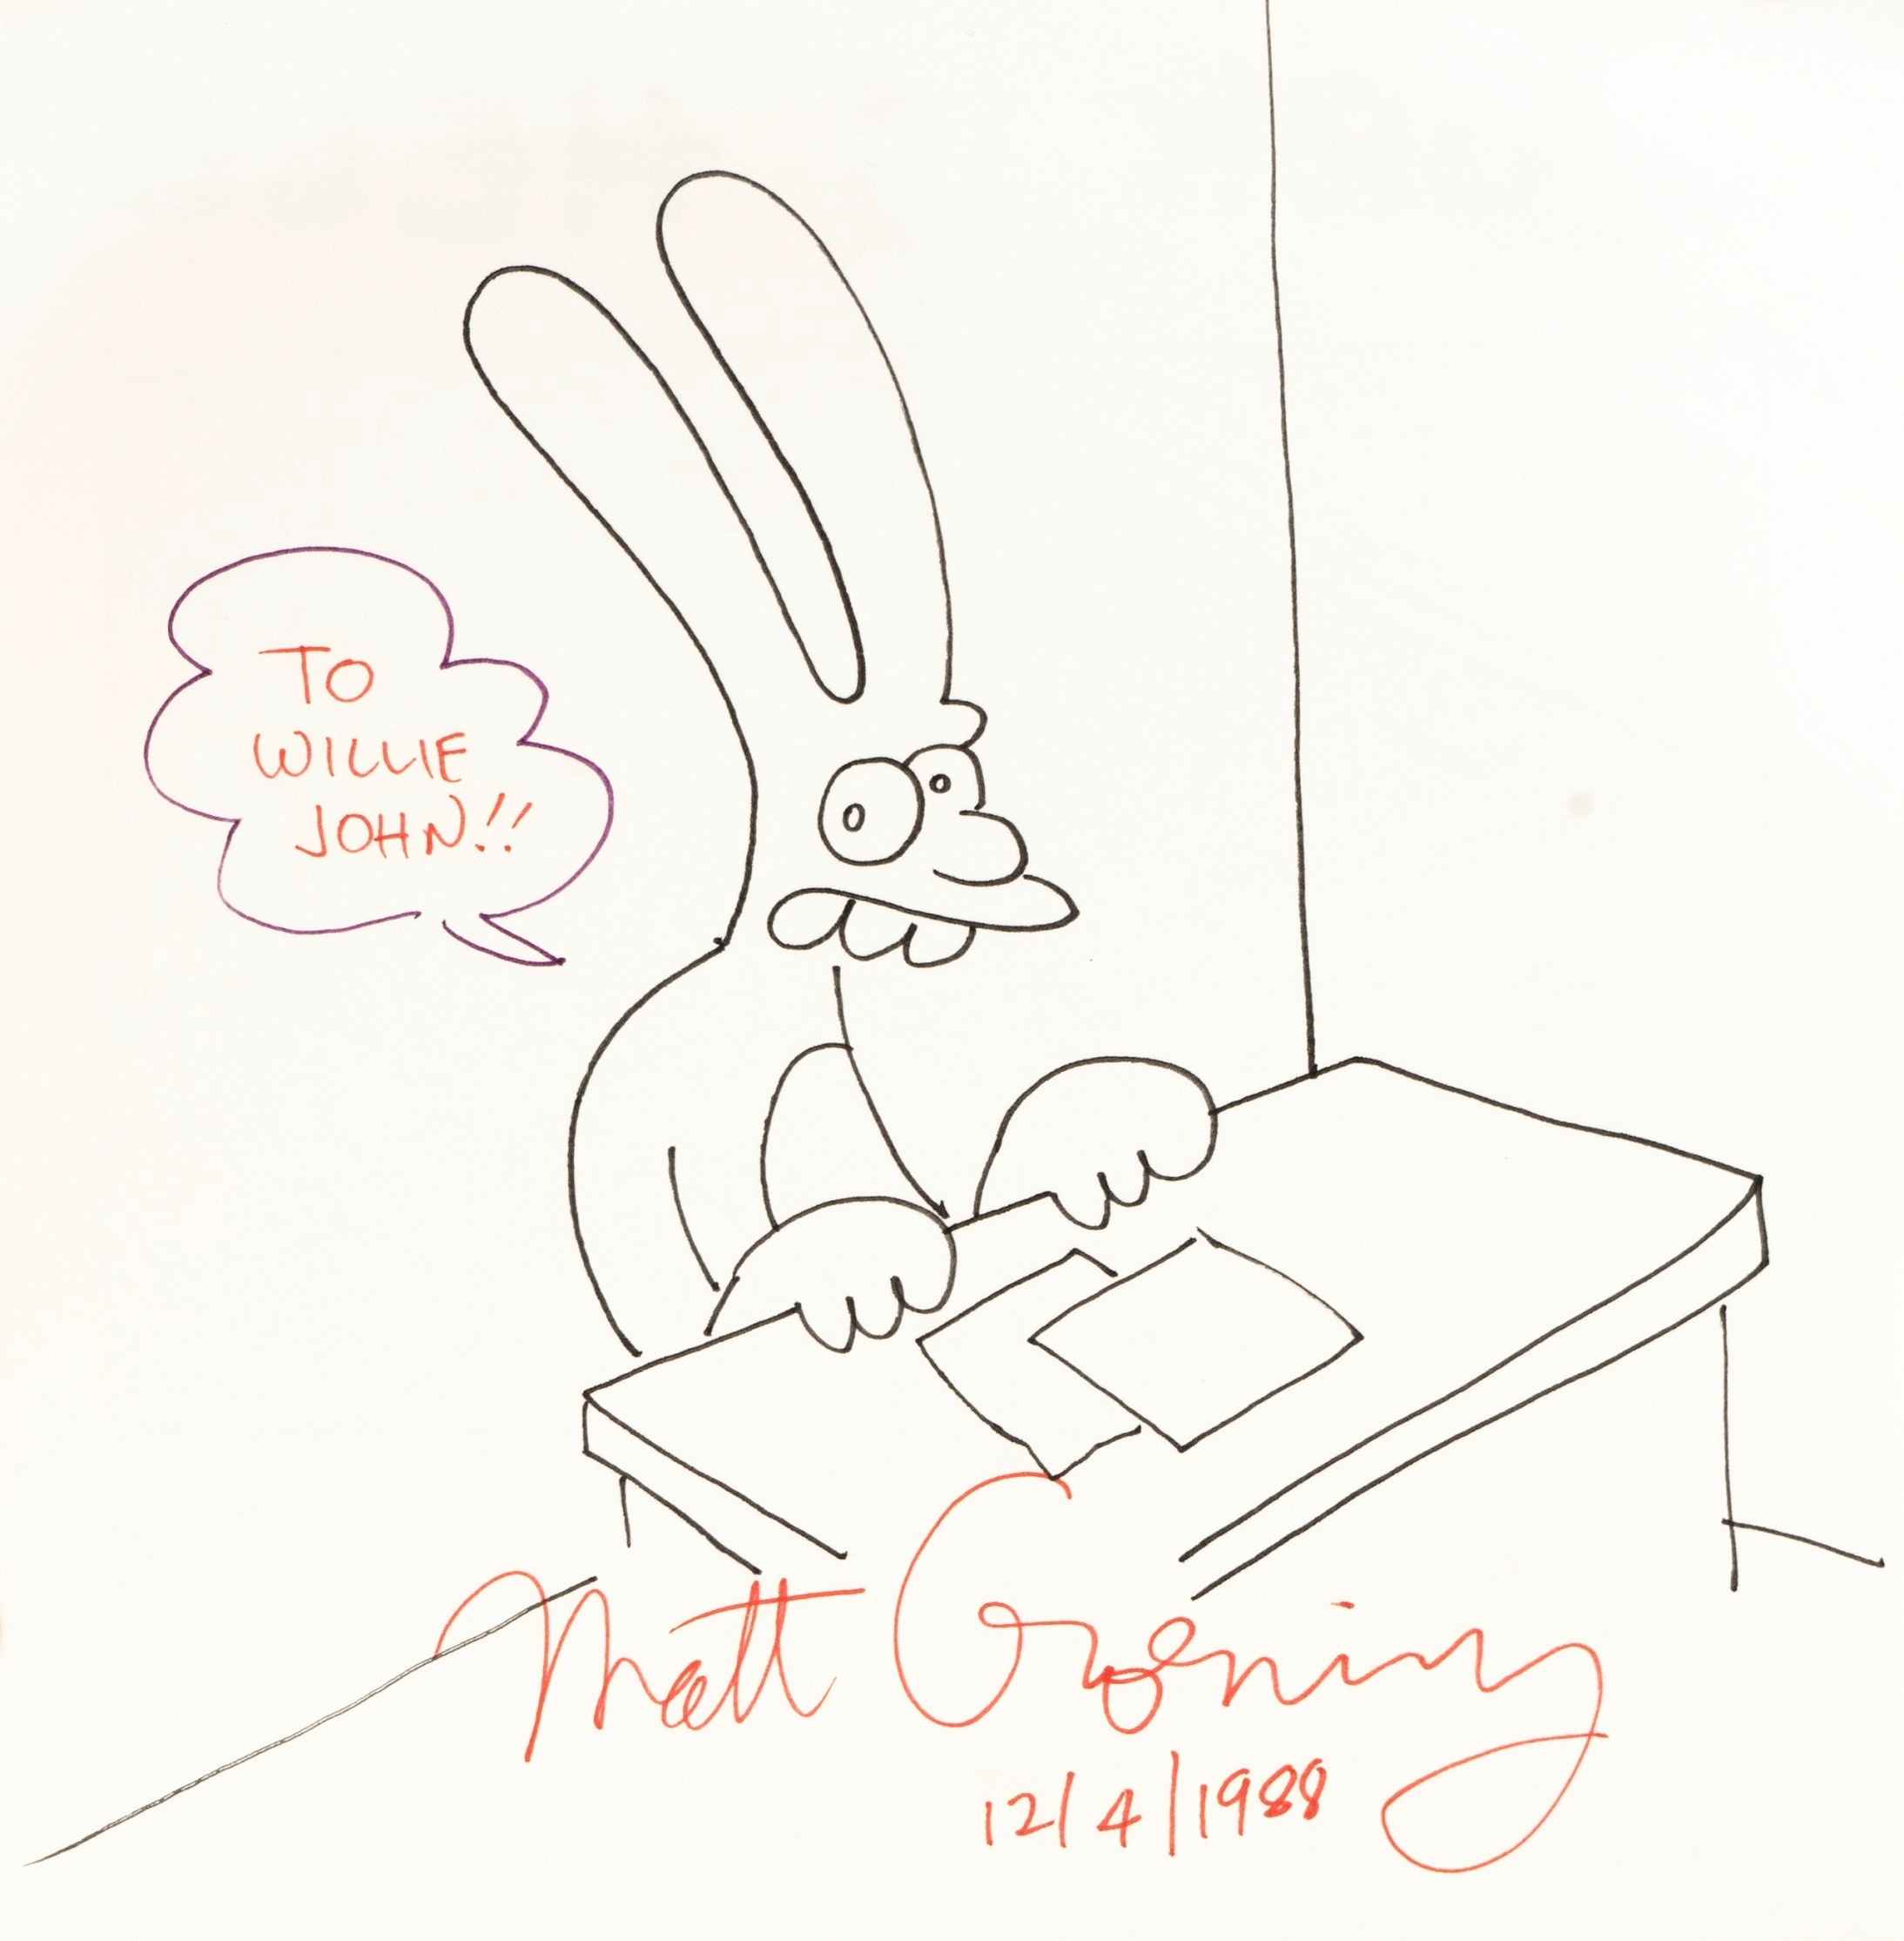 “Work is Hell” by Matt Groening, 1988